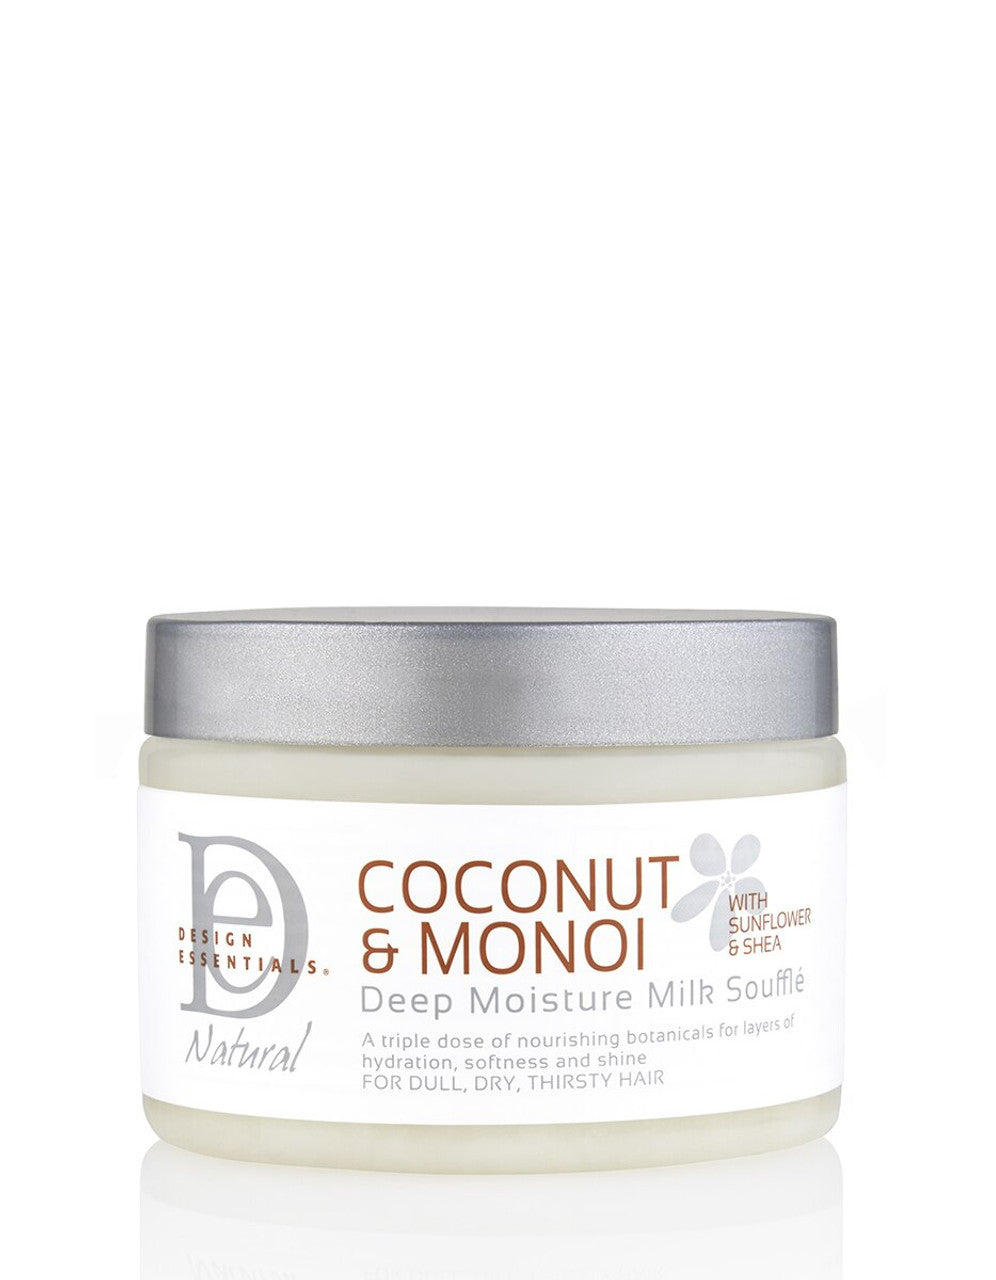 Design Essentials Coconut Monoi Deep Moisture Milk Souffle